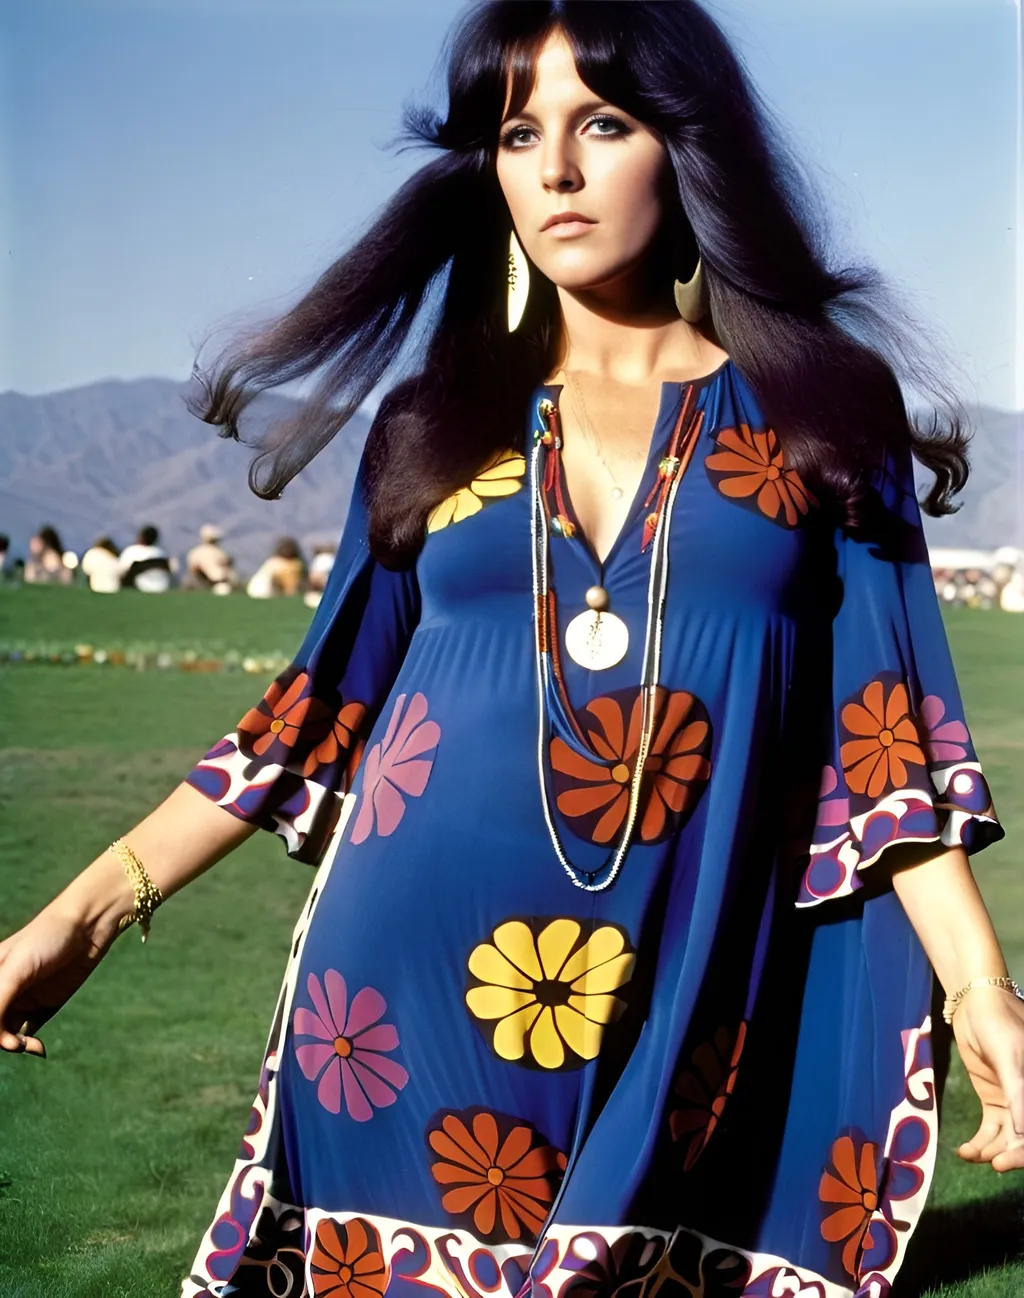 Prompt: grace slick in a hippie dress 